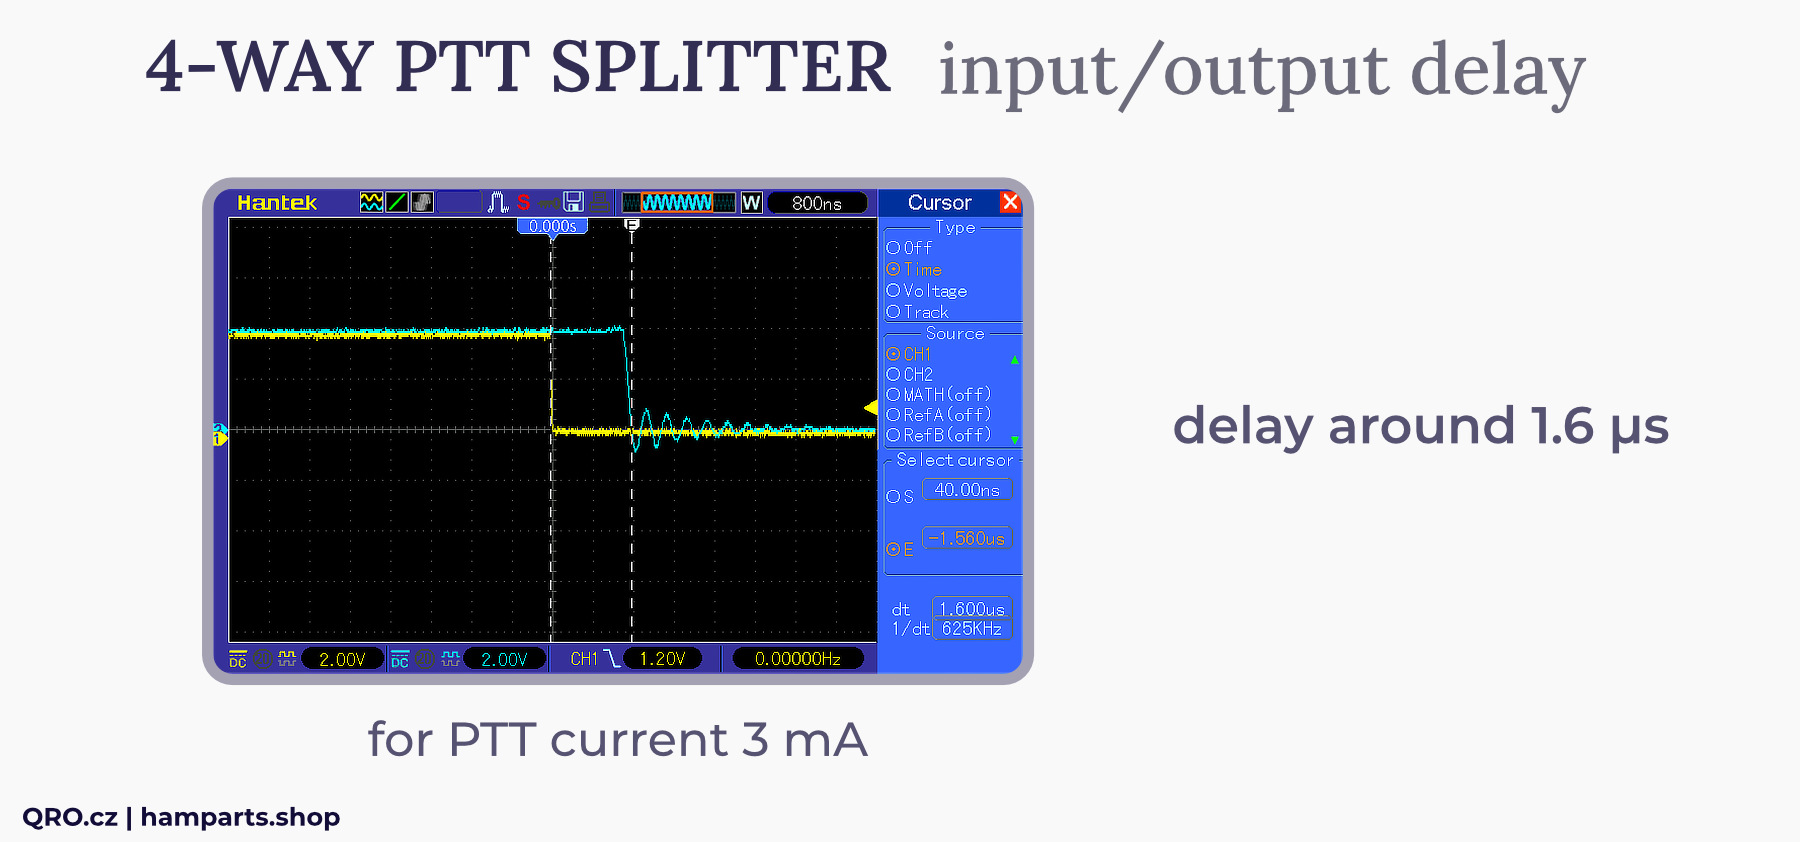 4-way ptt splitter delay by qro.cz hamparts.shop